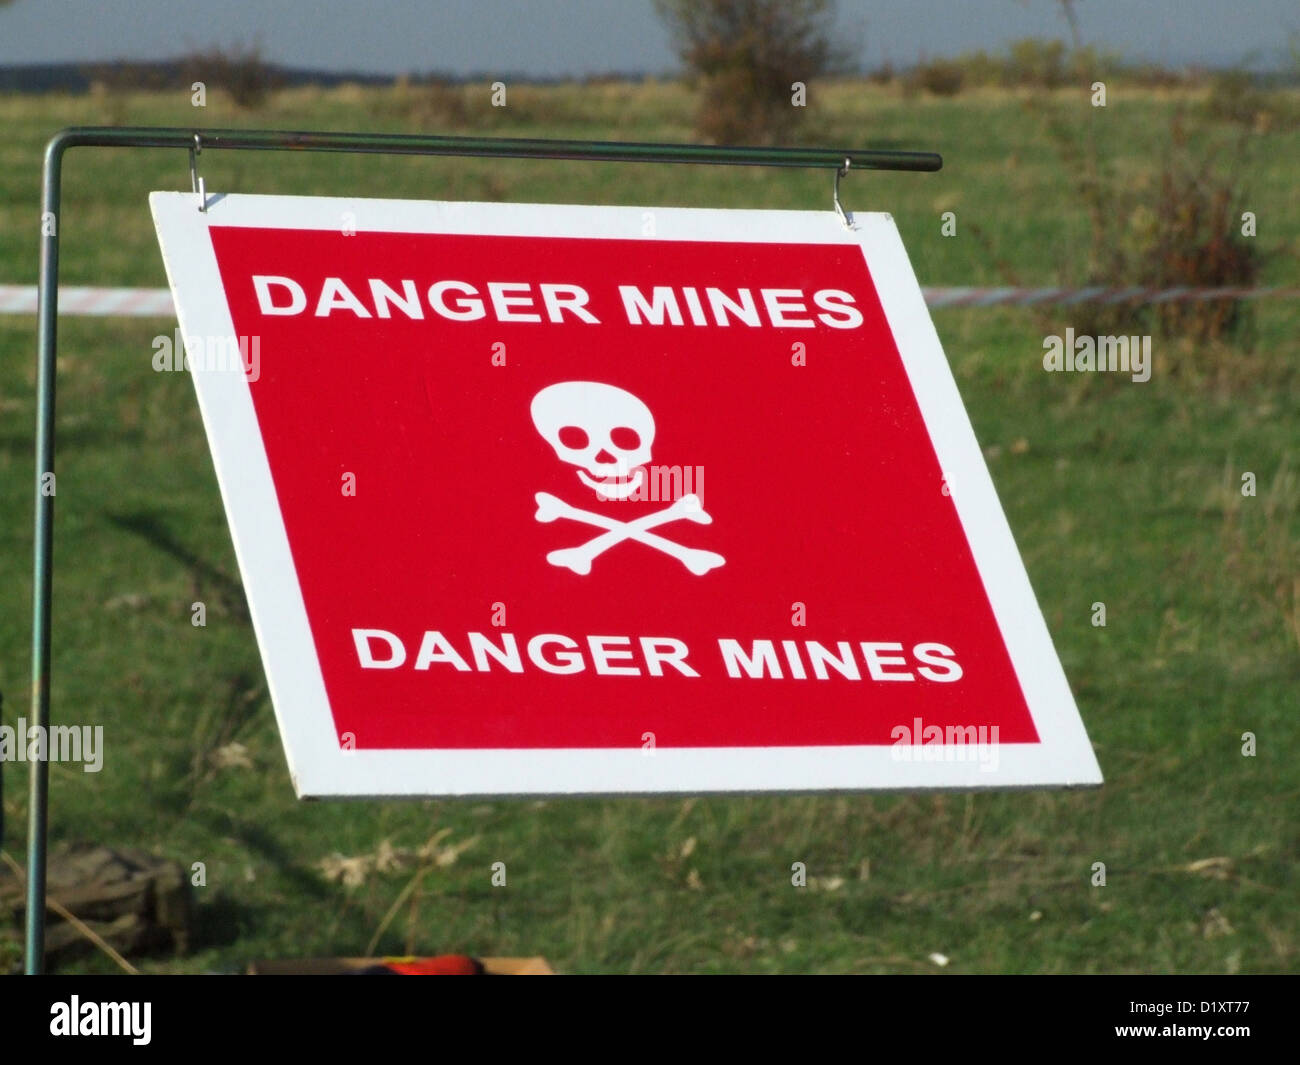 Warning sign on mined area Stock Photo